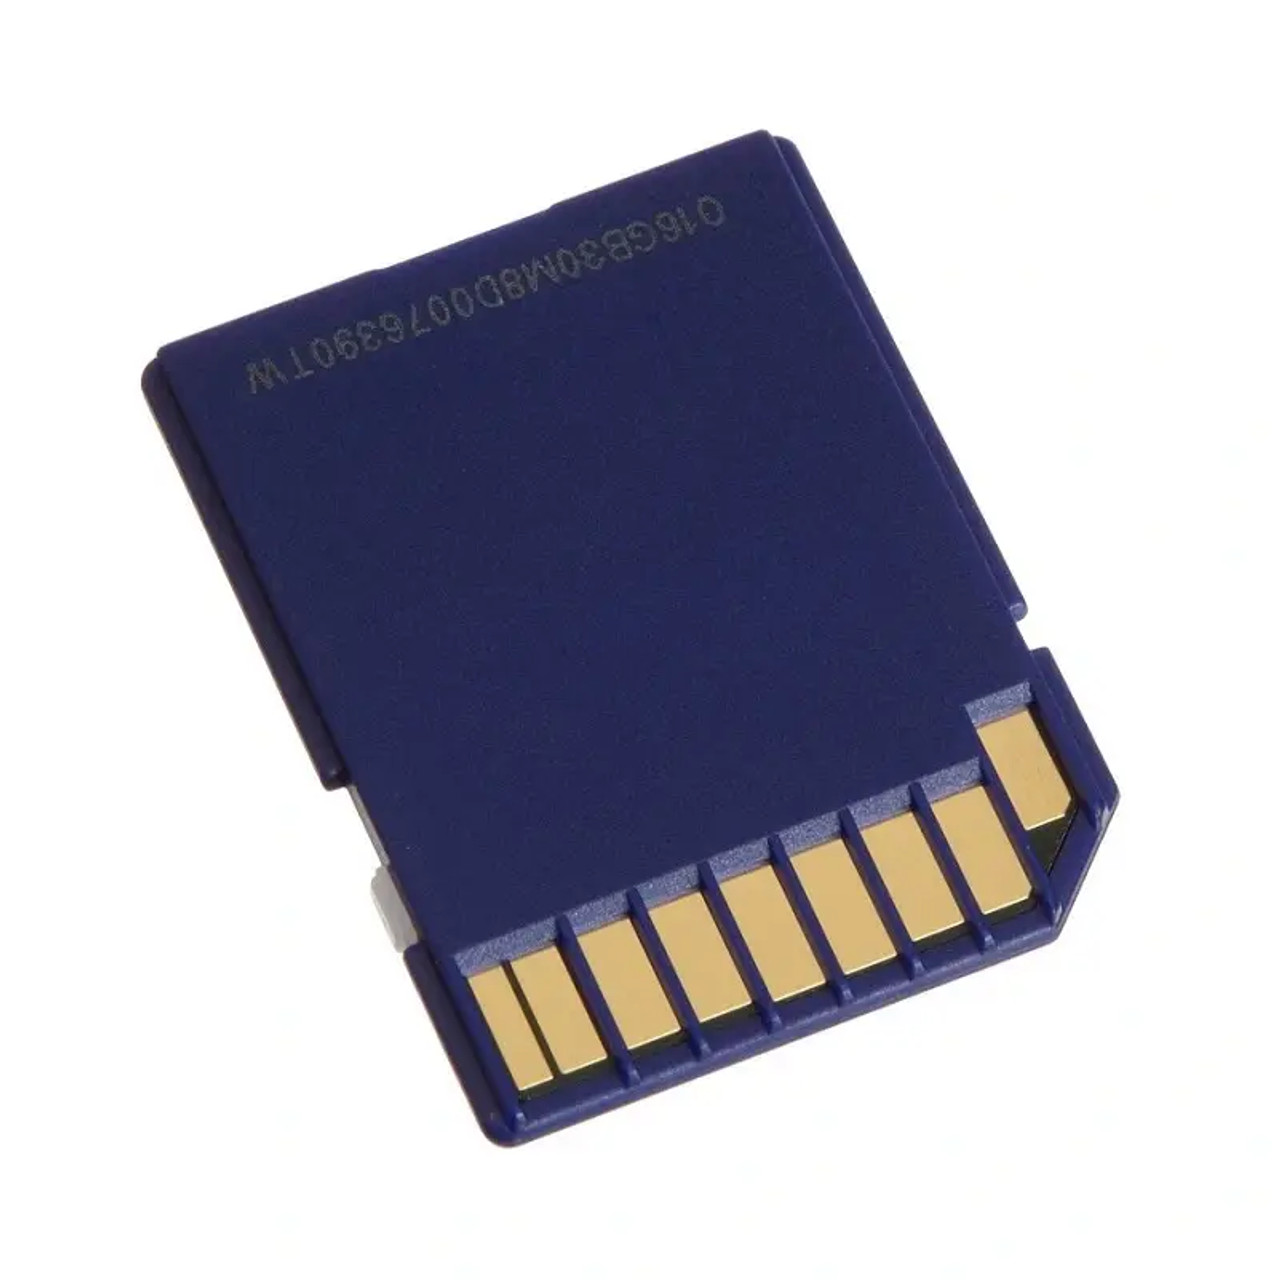 TS8GSDHC10M | Transcend | 8GB Class 10 SDHC Flash Memory Card